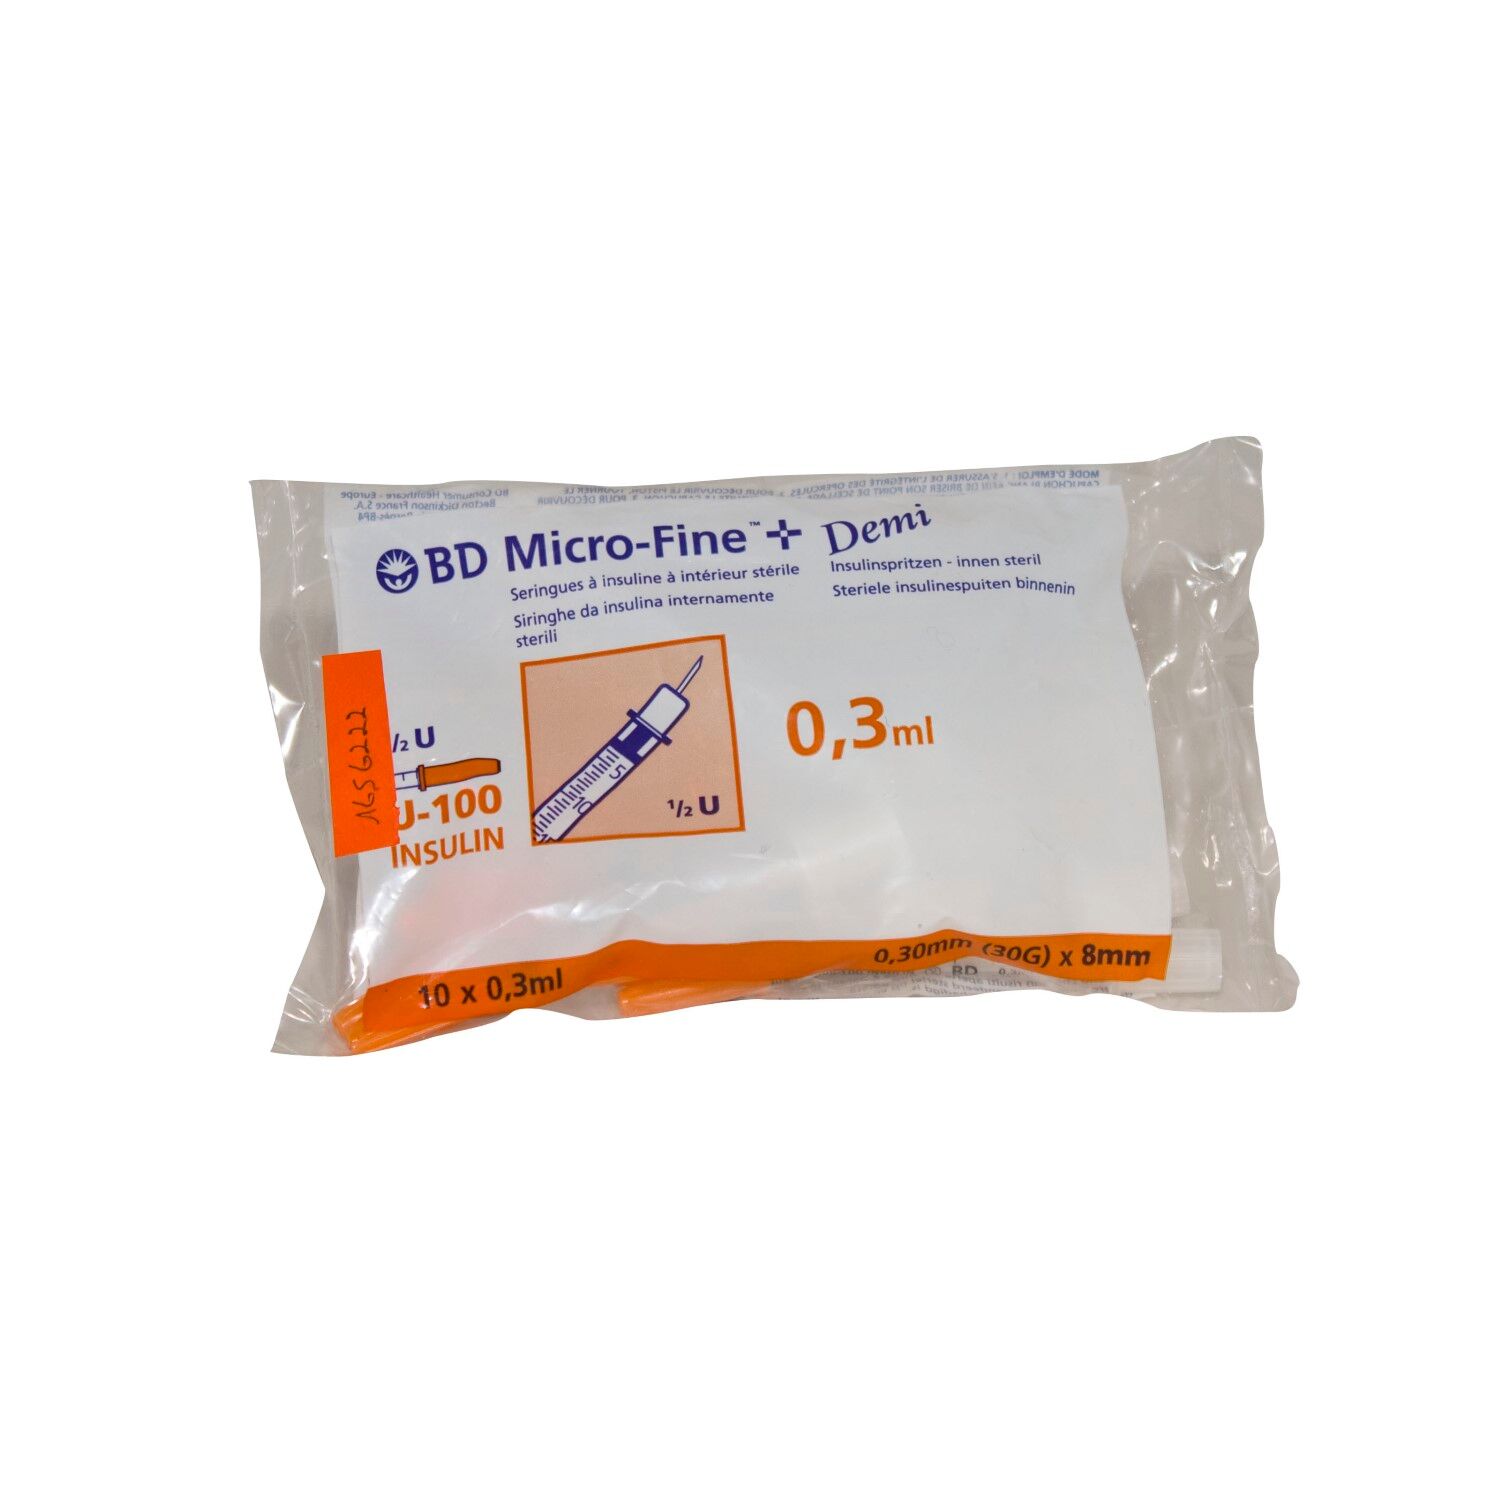 Bd Microfine+ Demi Seringues à Insuline 0.3ml 30G 10 Pieces Ref 320837